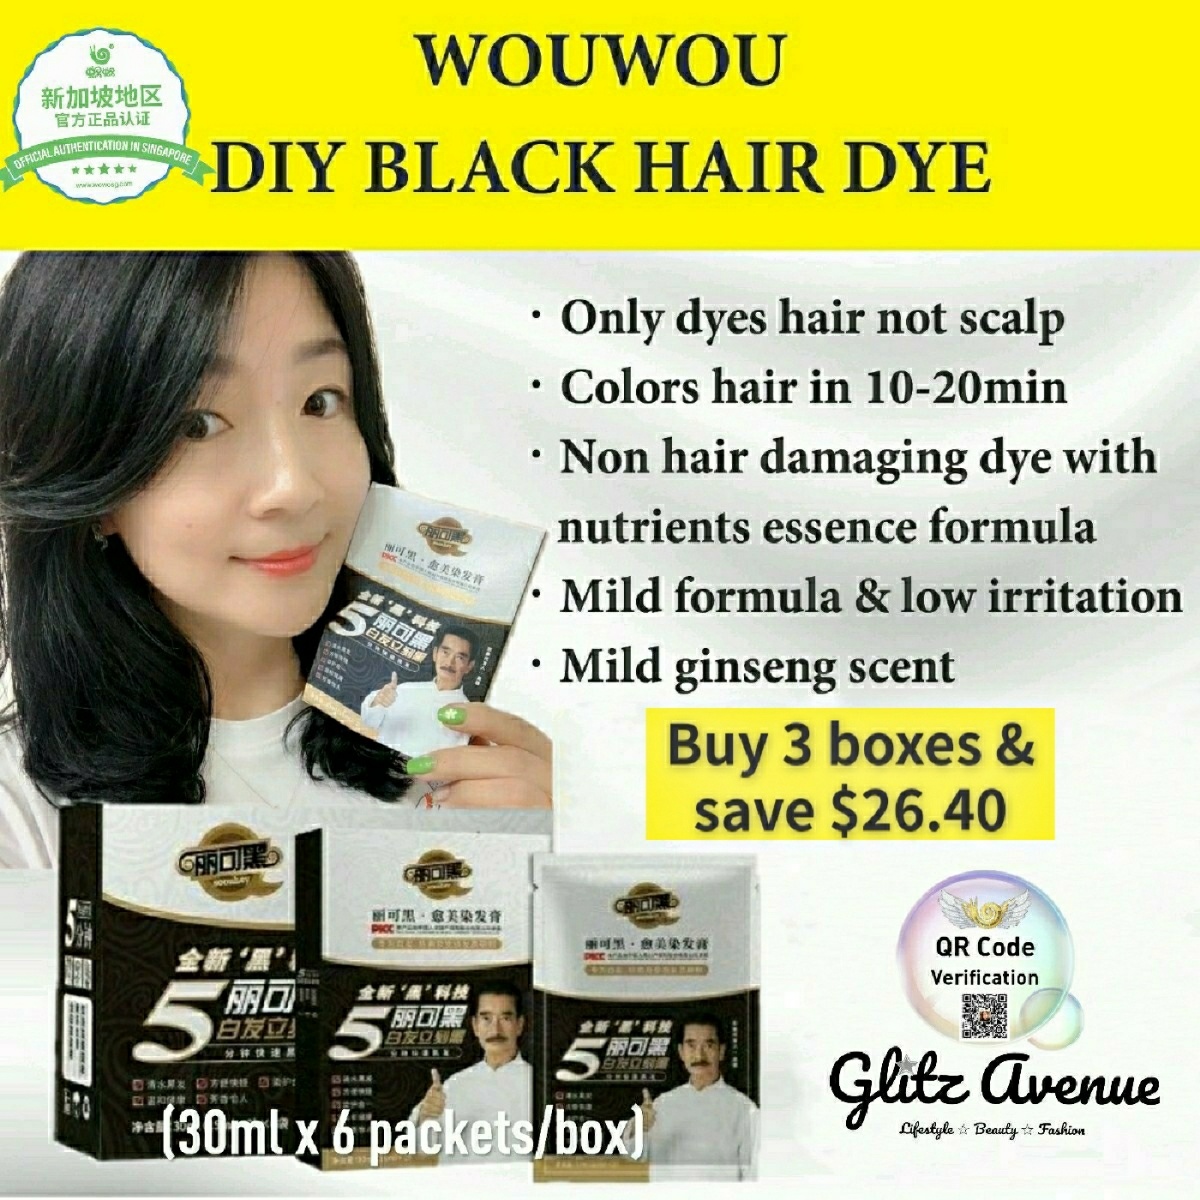 Qoo10 Wouwou Soonhey Diy Black Hair Dye Black Cover White Hair Wou Wou W Hair Care